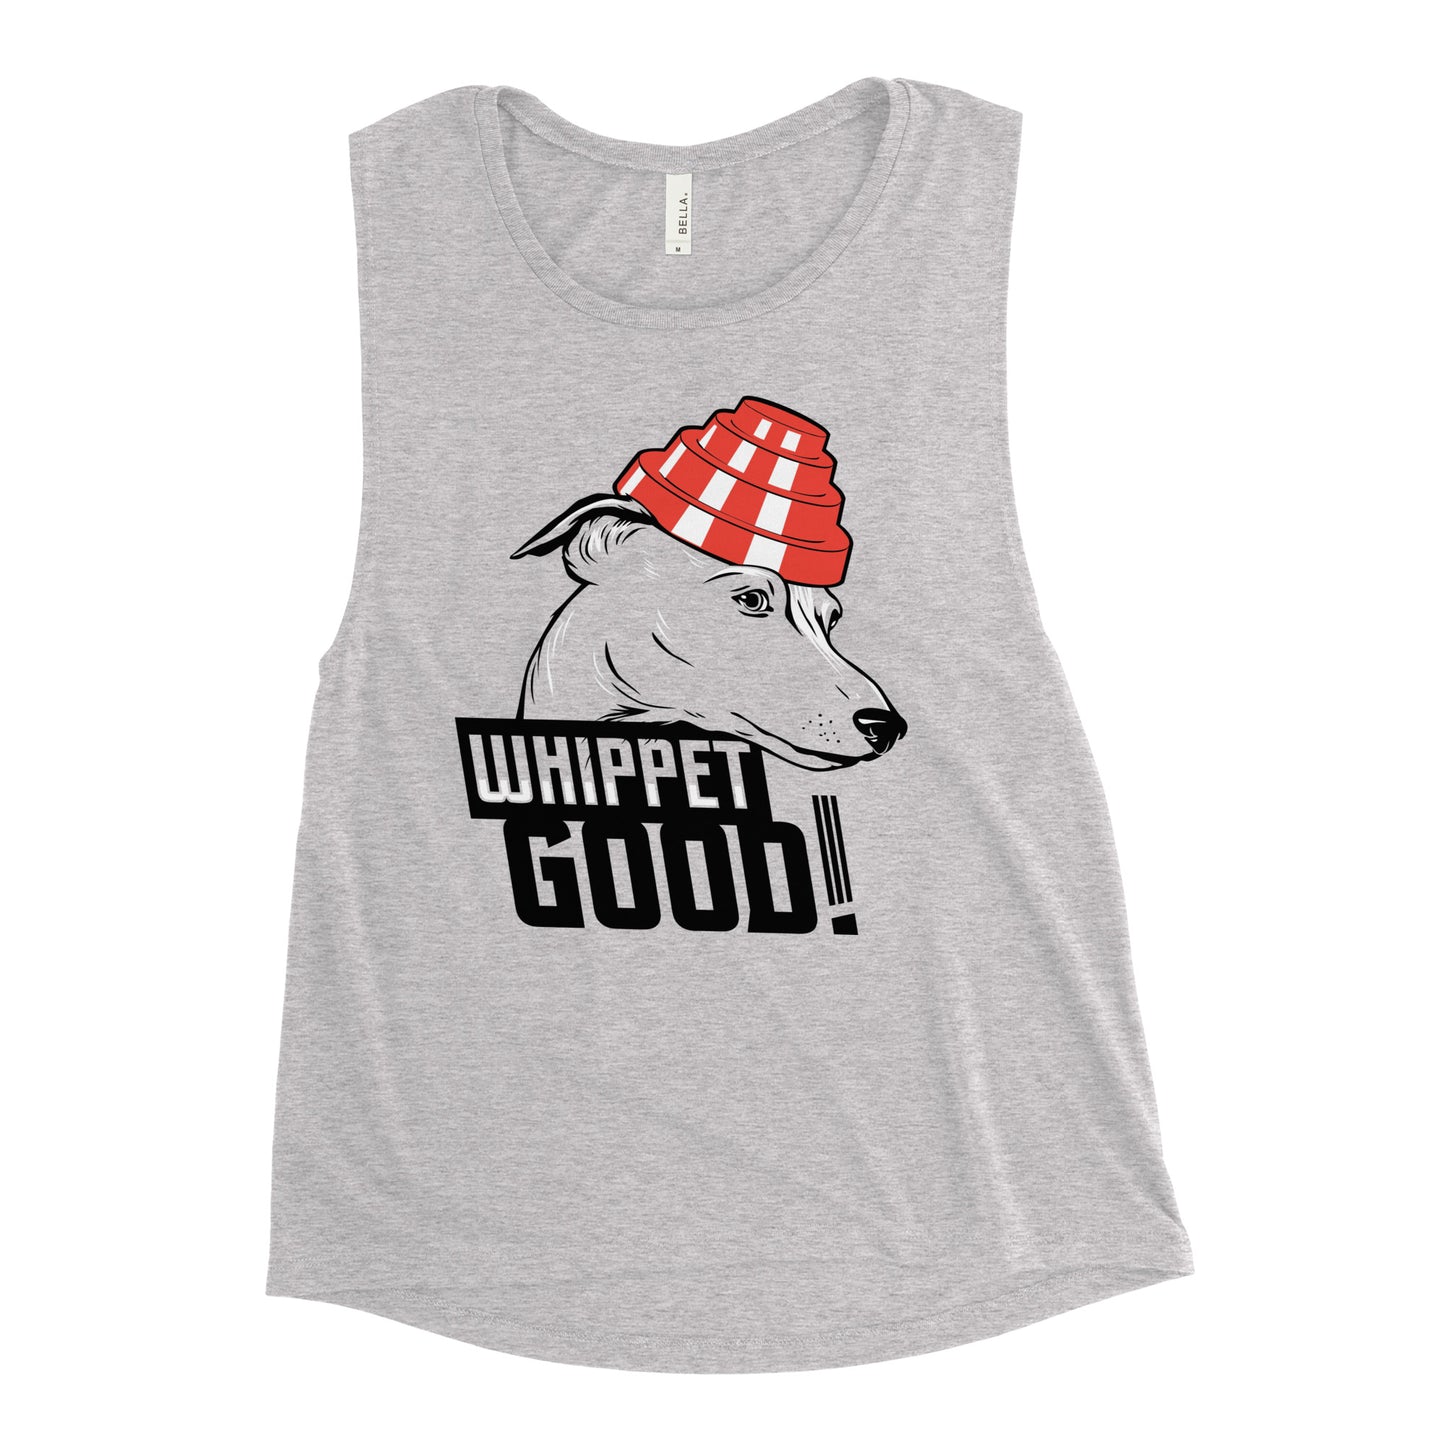 Whippet Good! Women's Muscle Tank